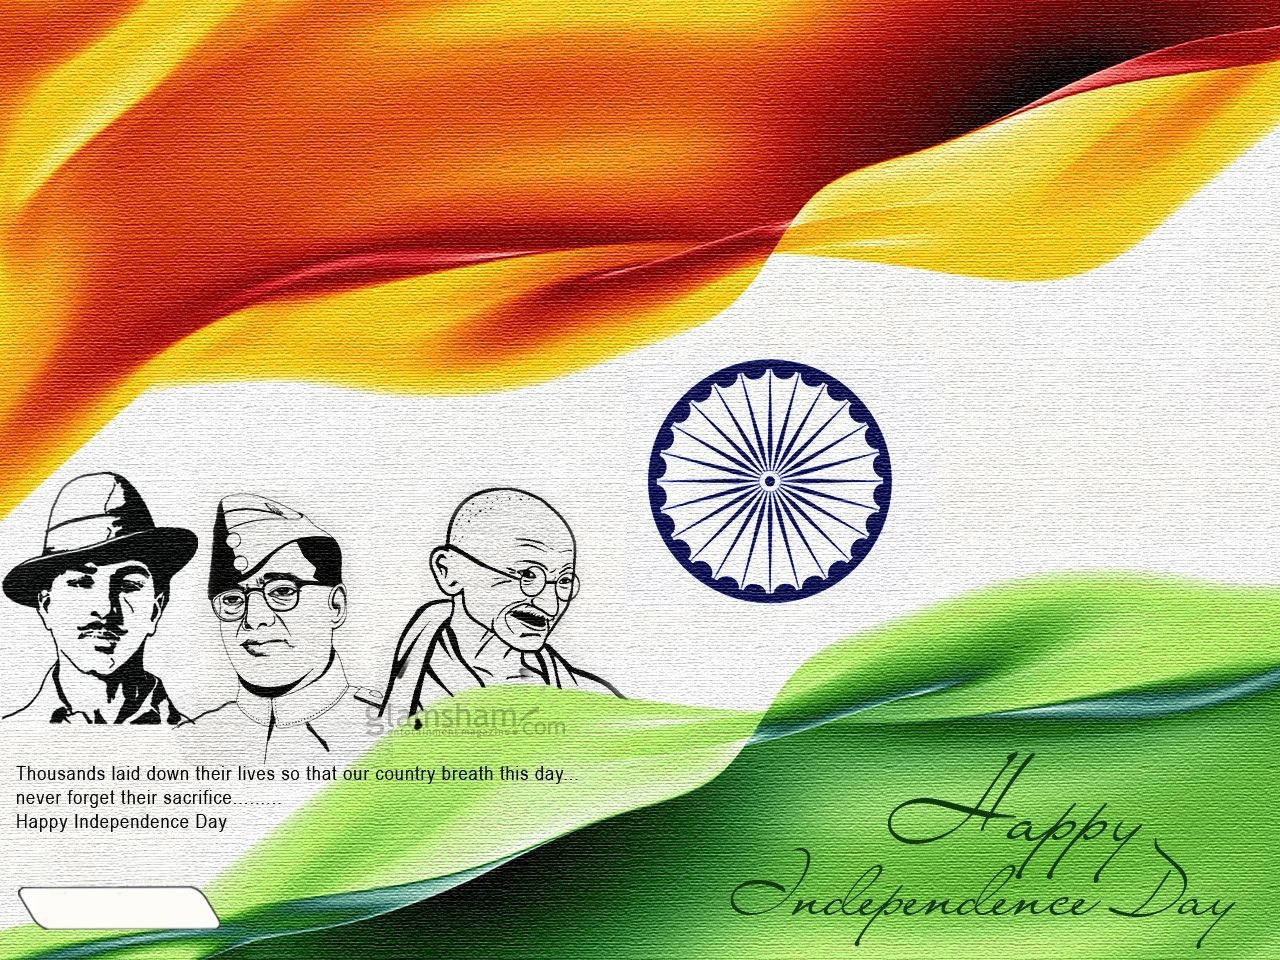 Free Netaji Wallpaper Downloads, [100+] Netaji Wallpapers for FREE |  